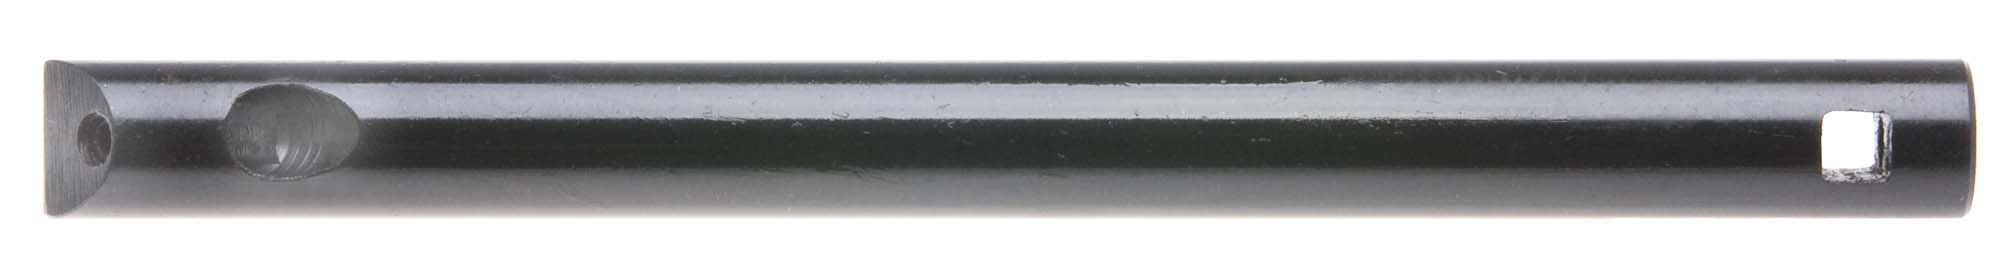 5/8" Double End Boring Bar- High Speed Steel Toolbit Type